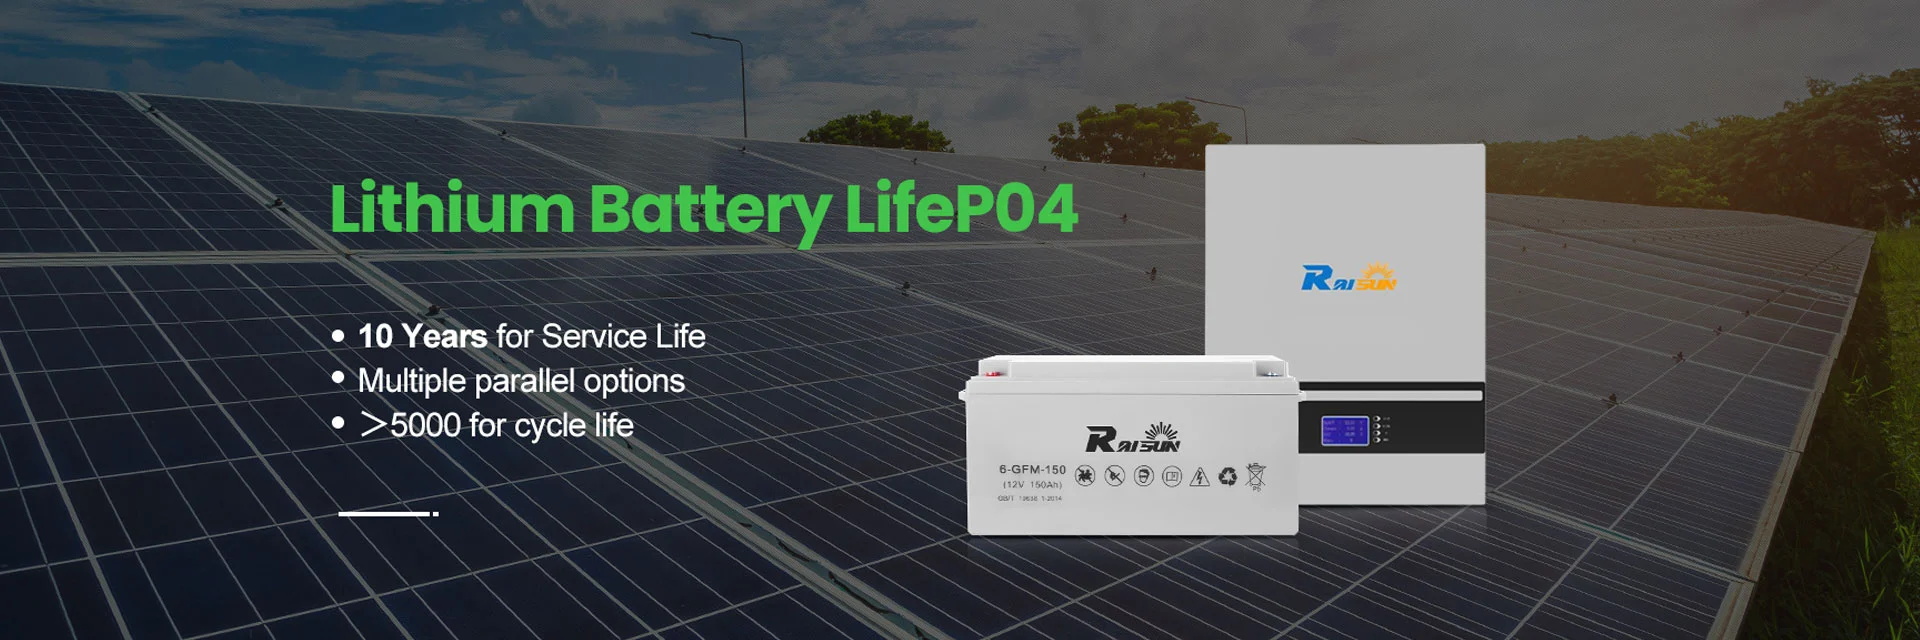 Types of Lithium Battery LiFePO4